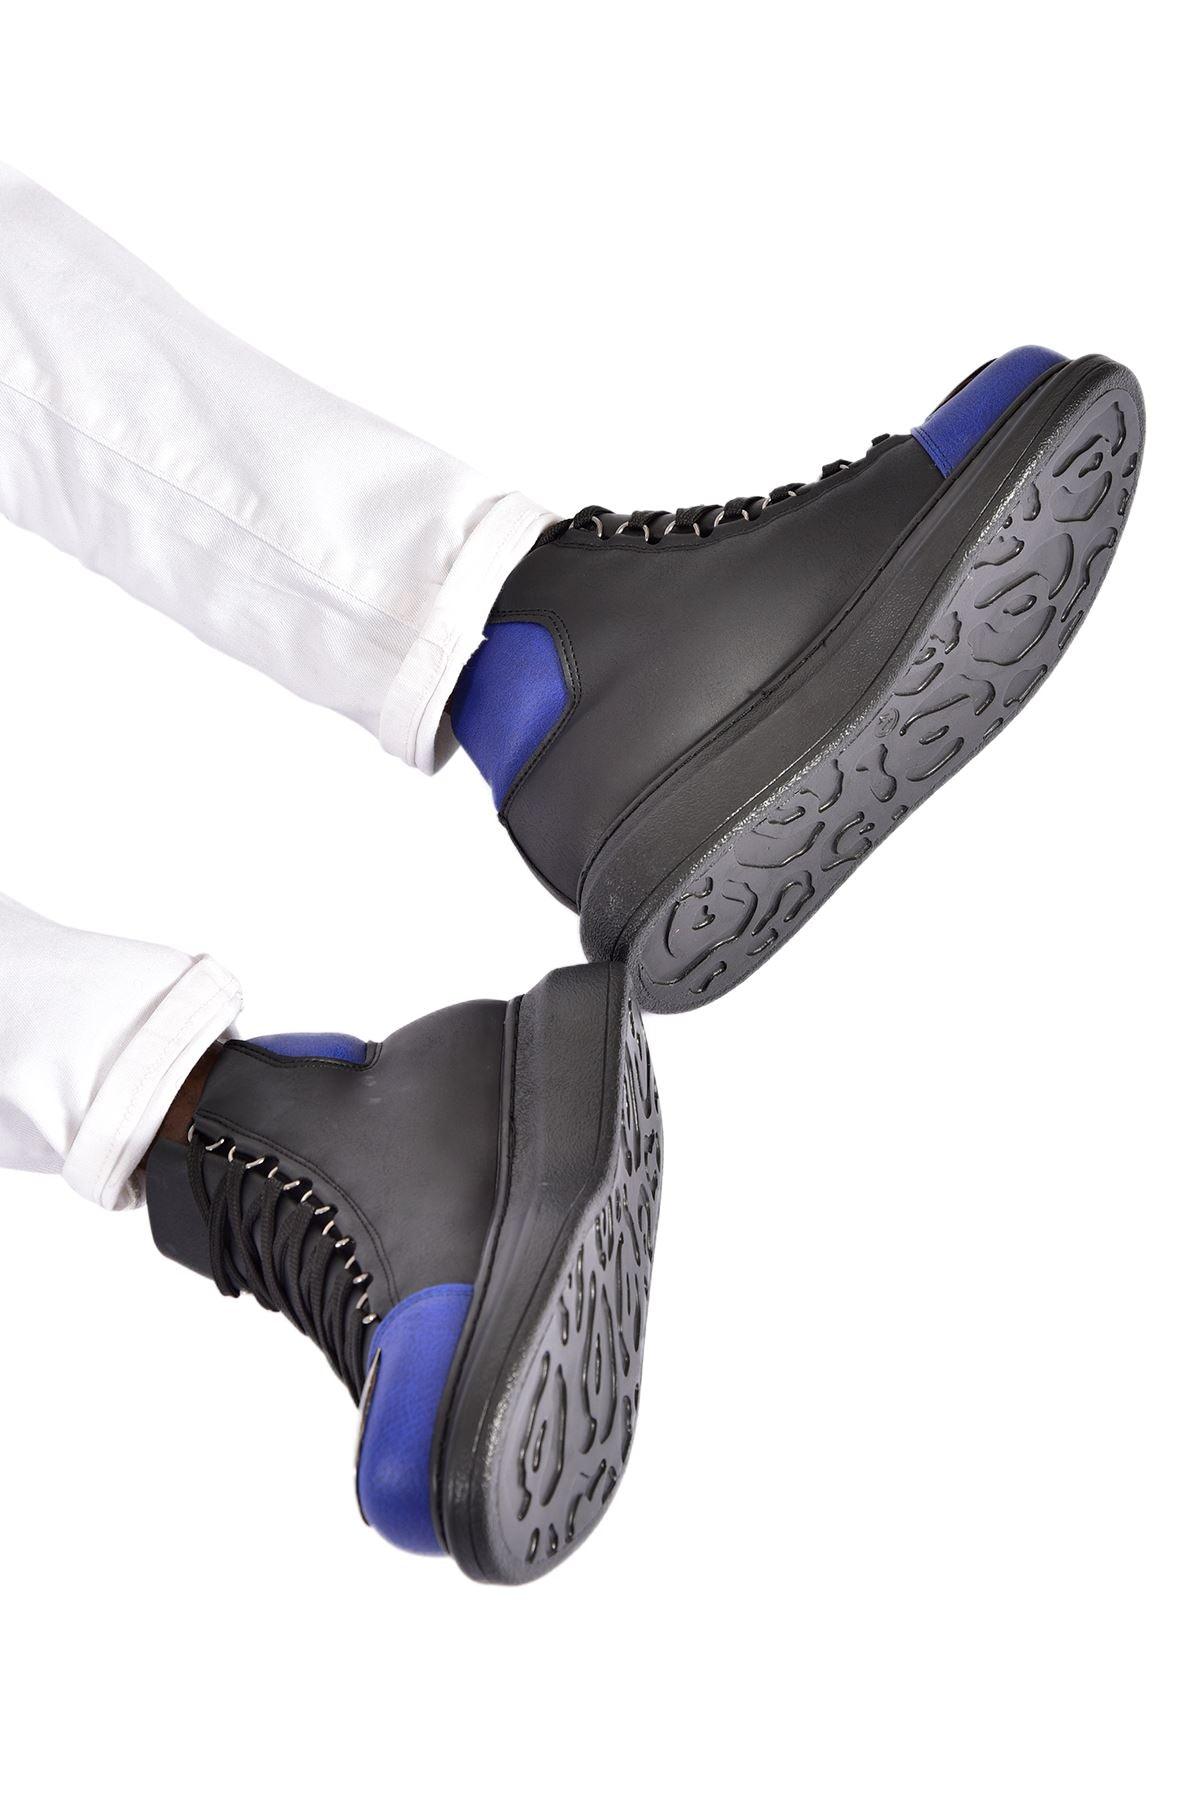 CH267 Men's shoes sneakers Boots BLACK/SAX BLUE - STREET MODE ™